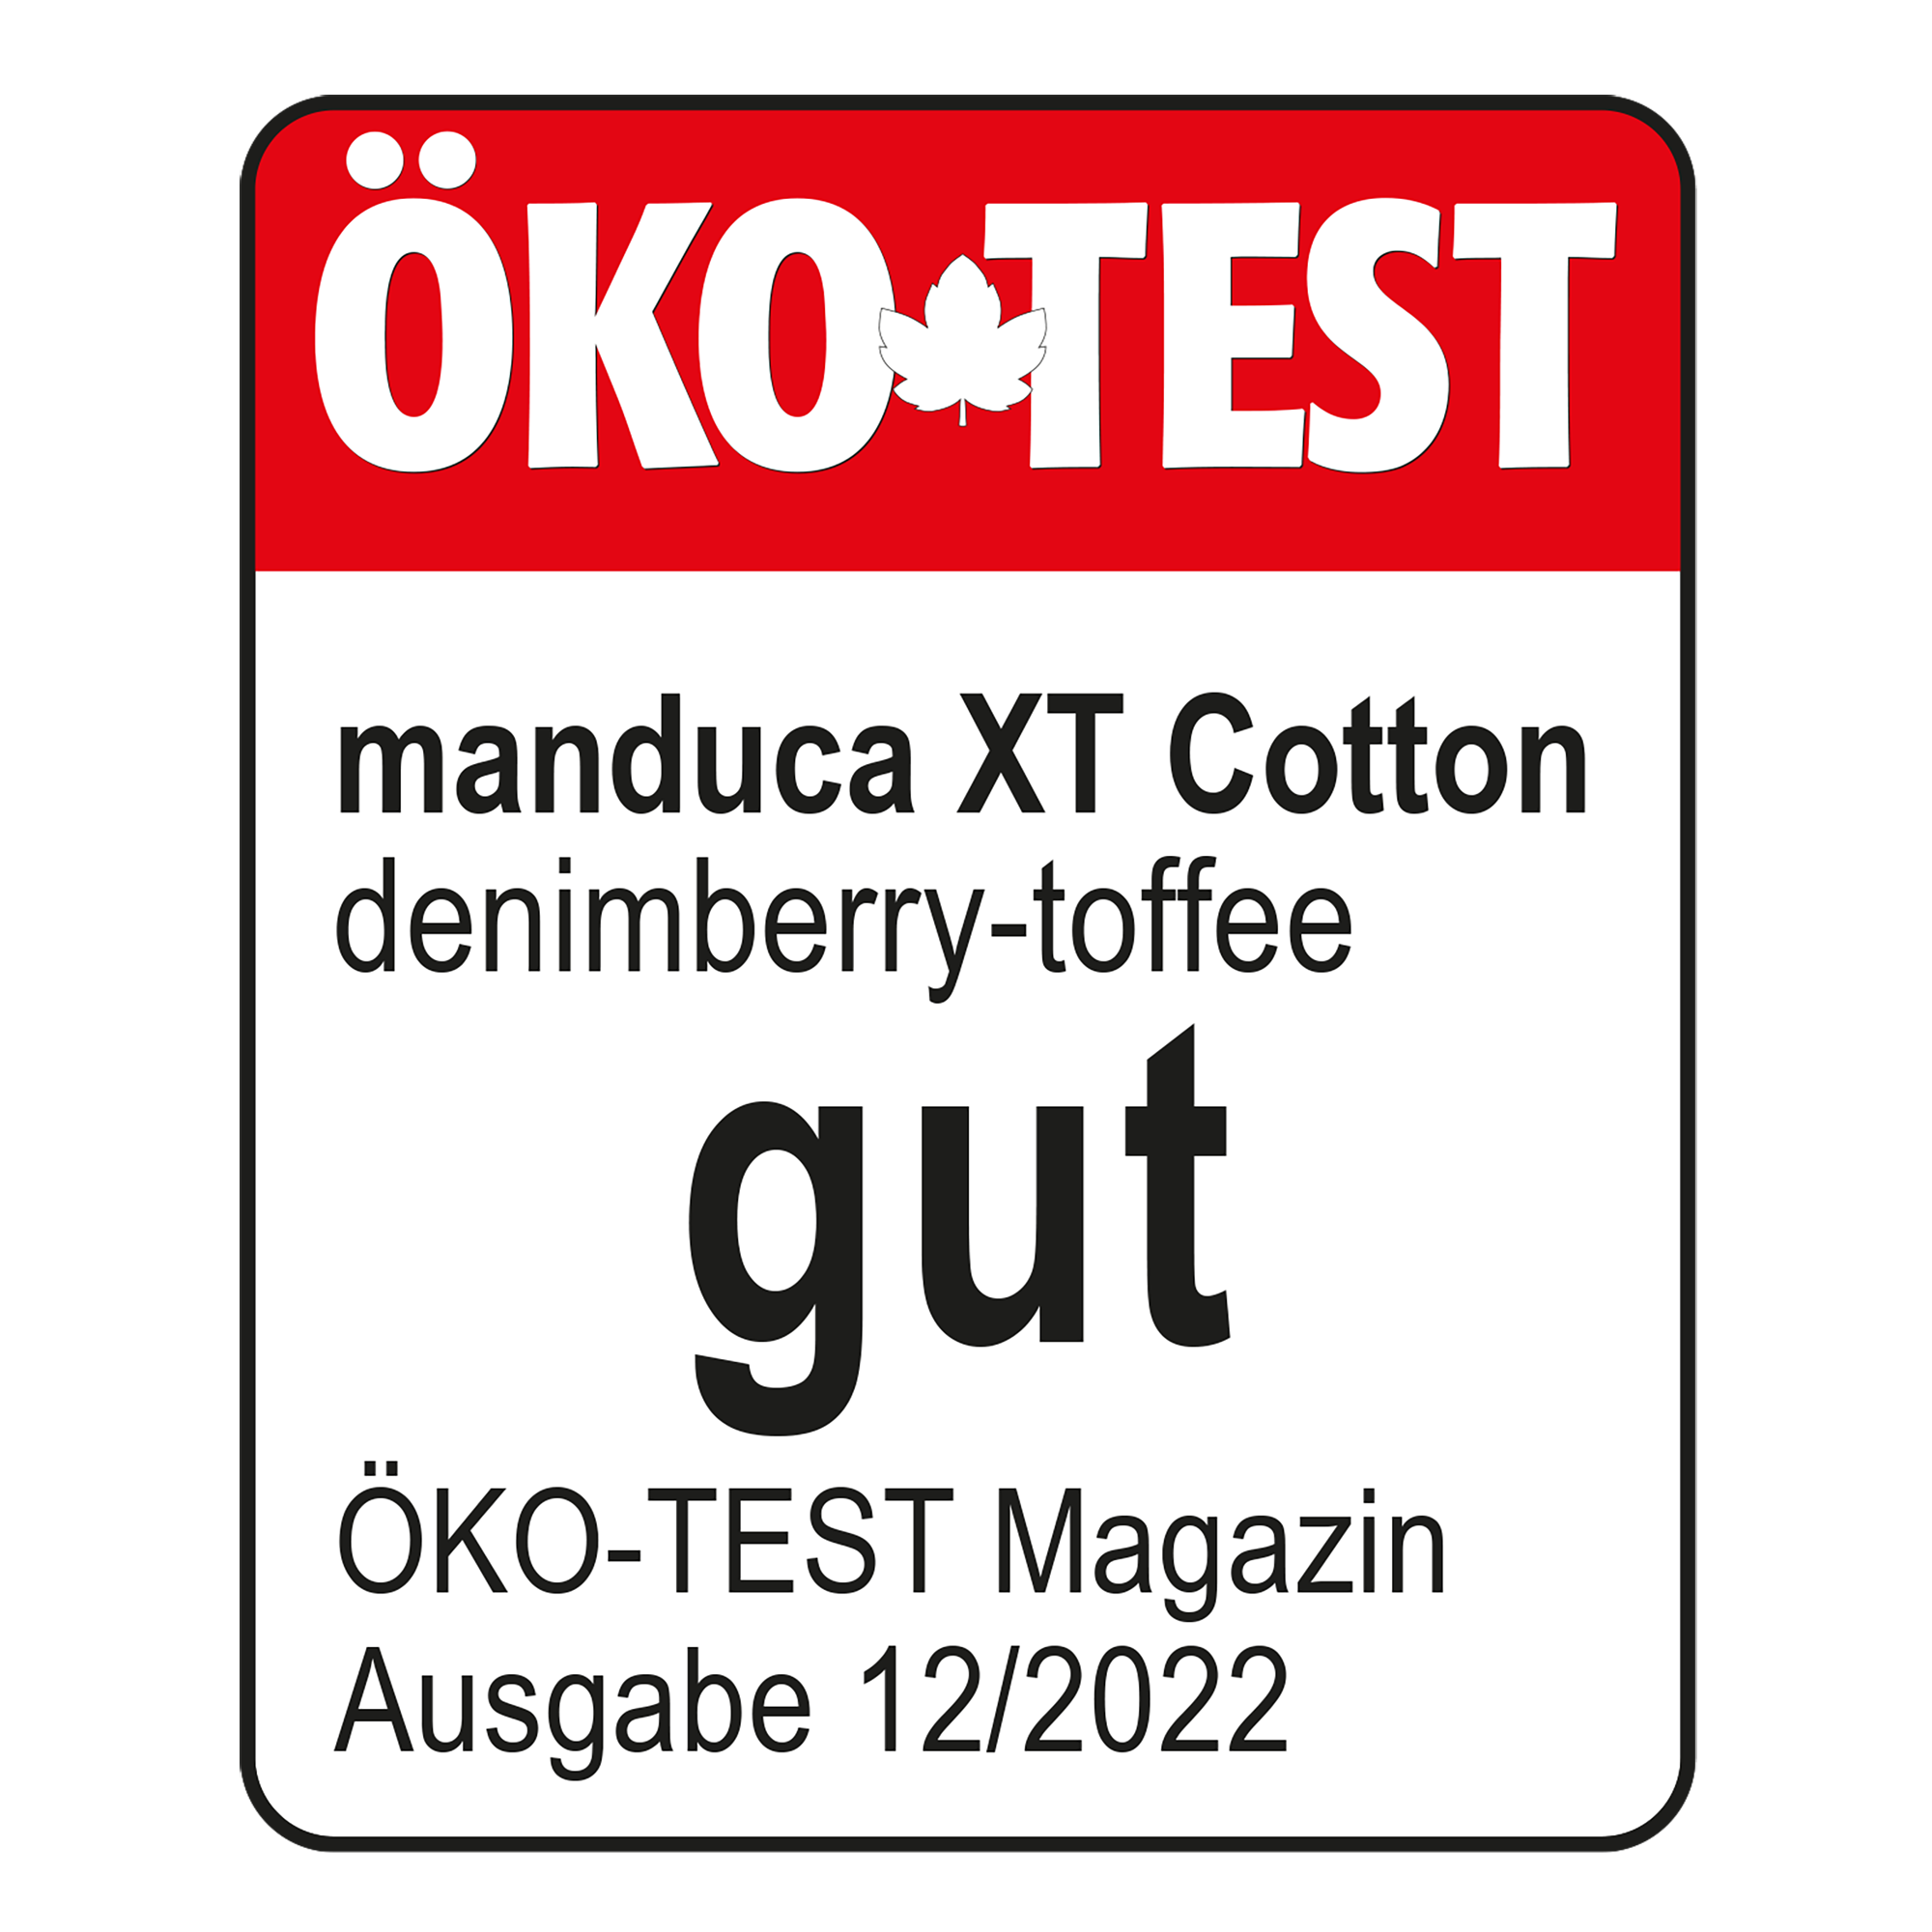 XT Cotton denimberry-toffee manduca Rot 2000581802800 8